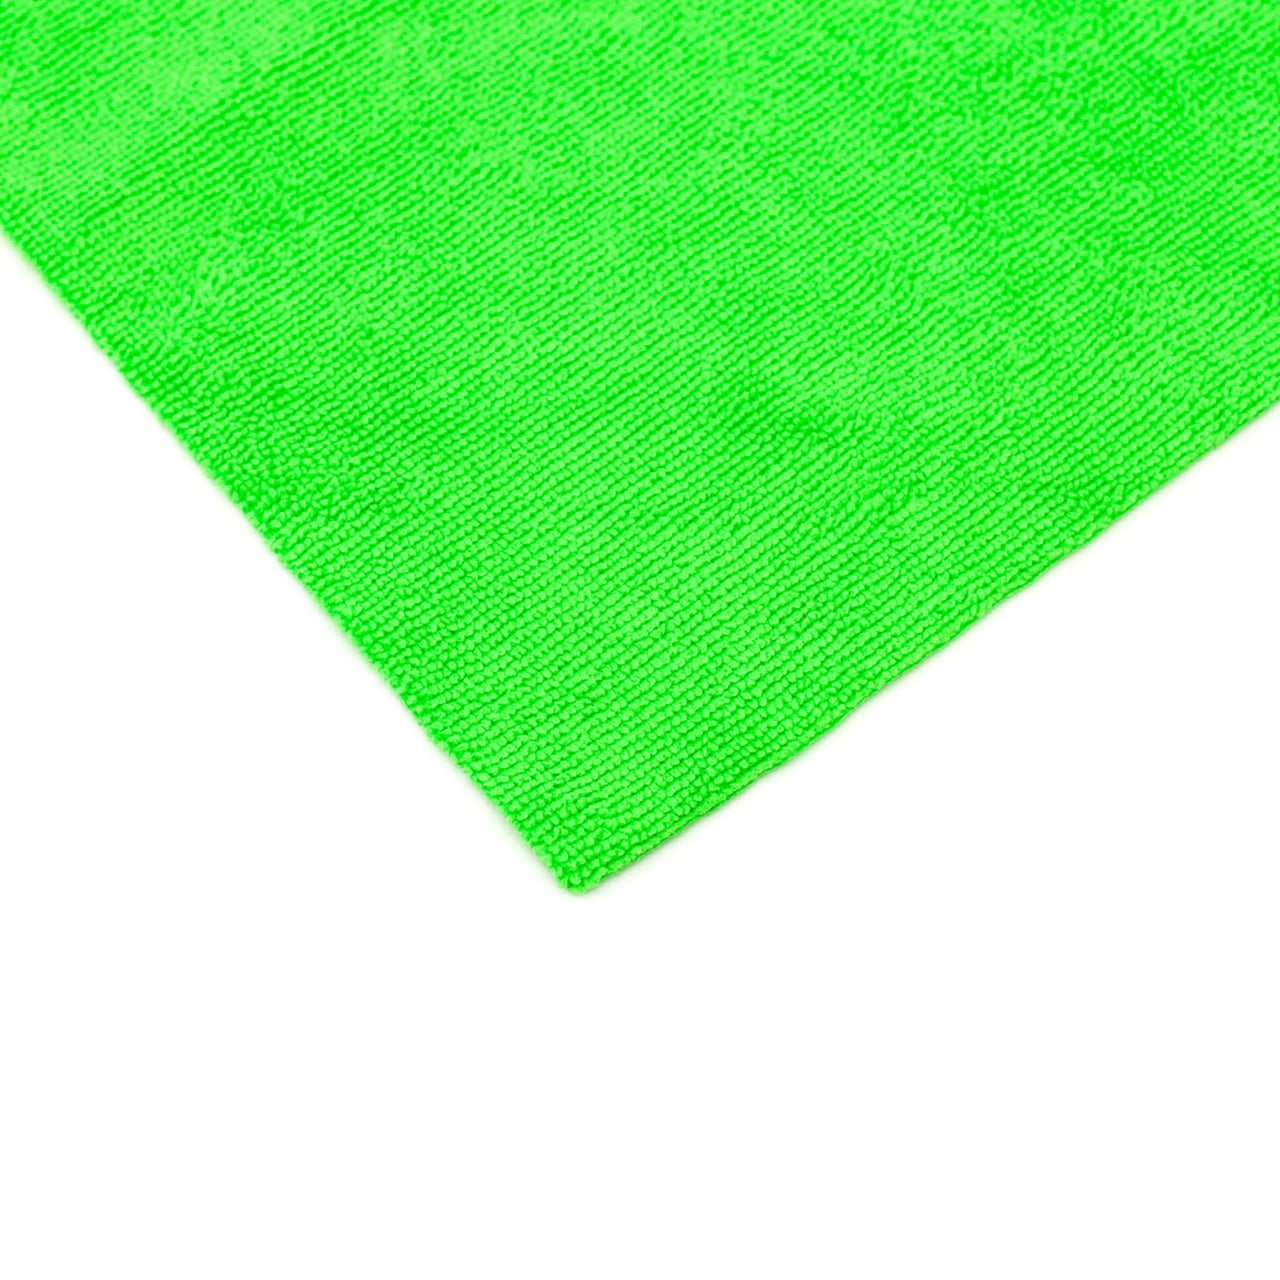 The Rag Company Edgeless 245 All-Purpose 16 x 16 Microfiber Terry Towel - Lime Green